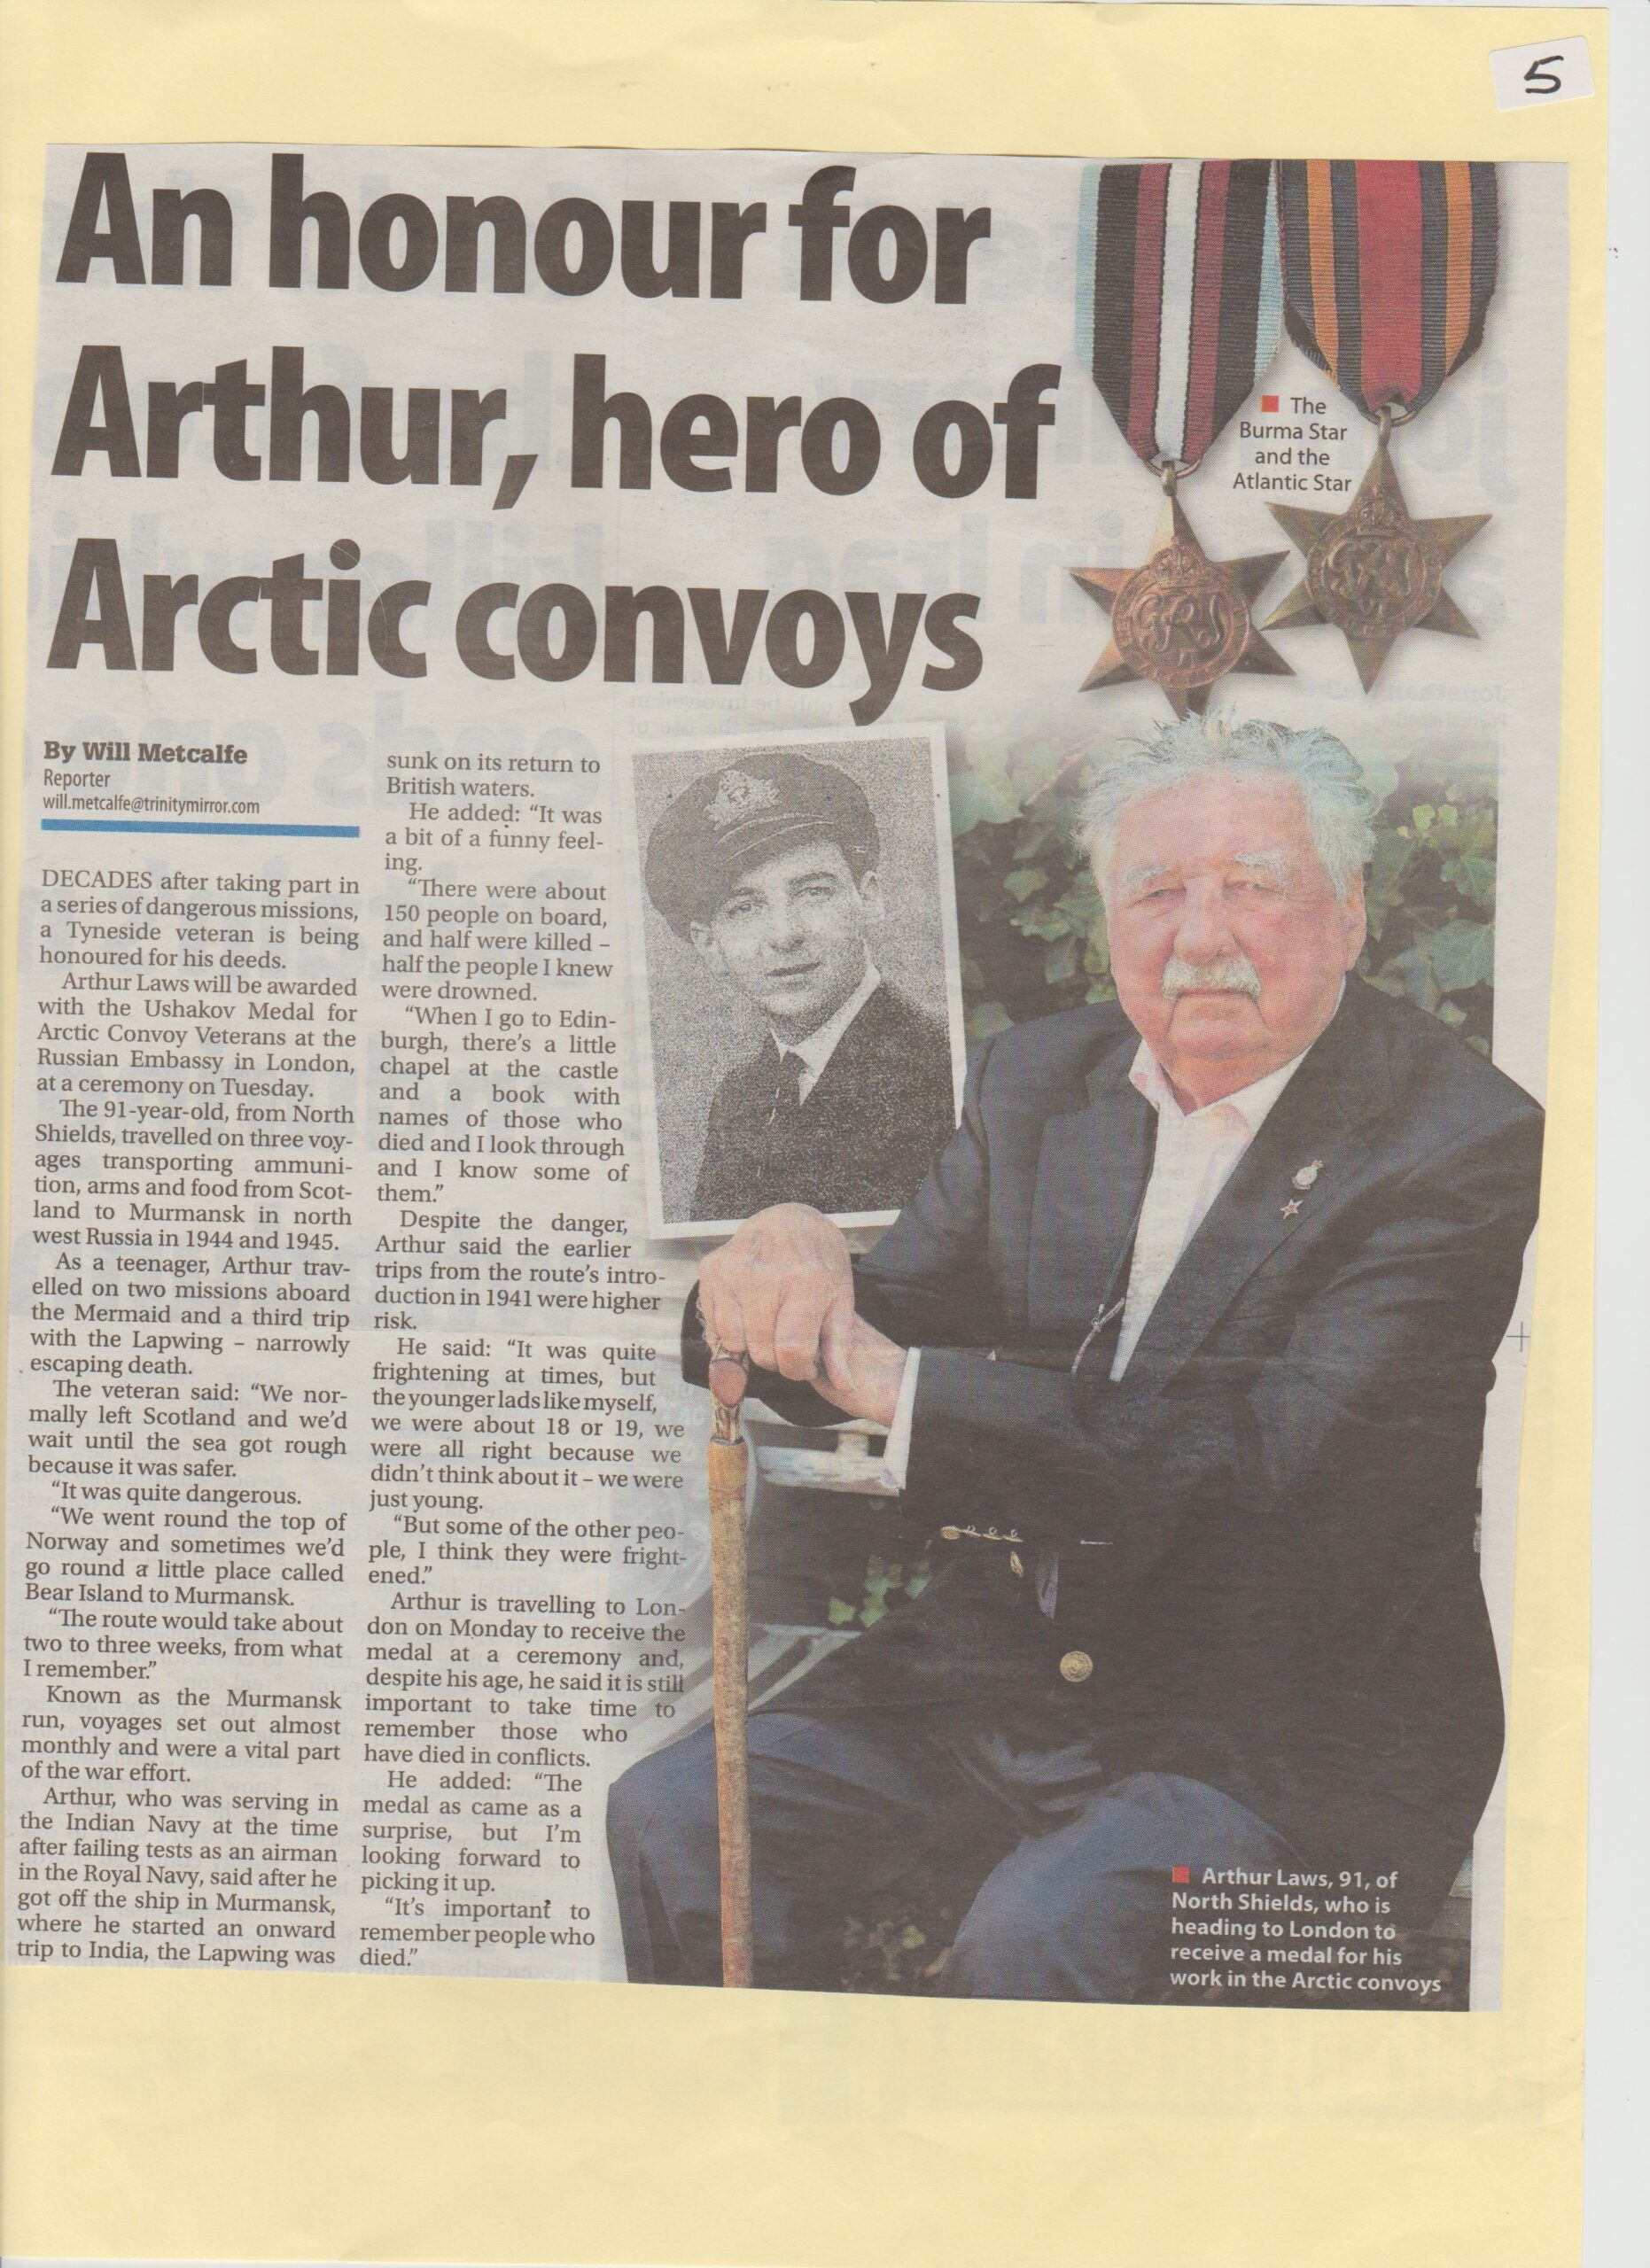 Arthur Laws Artic Convoy article